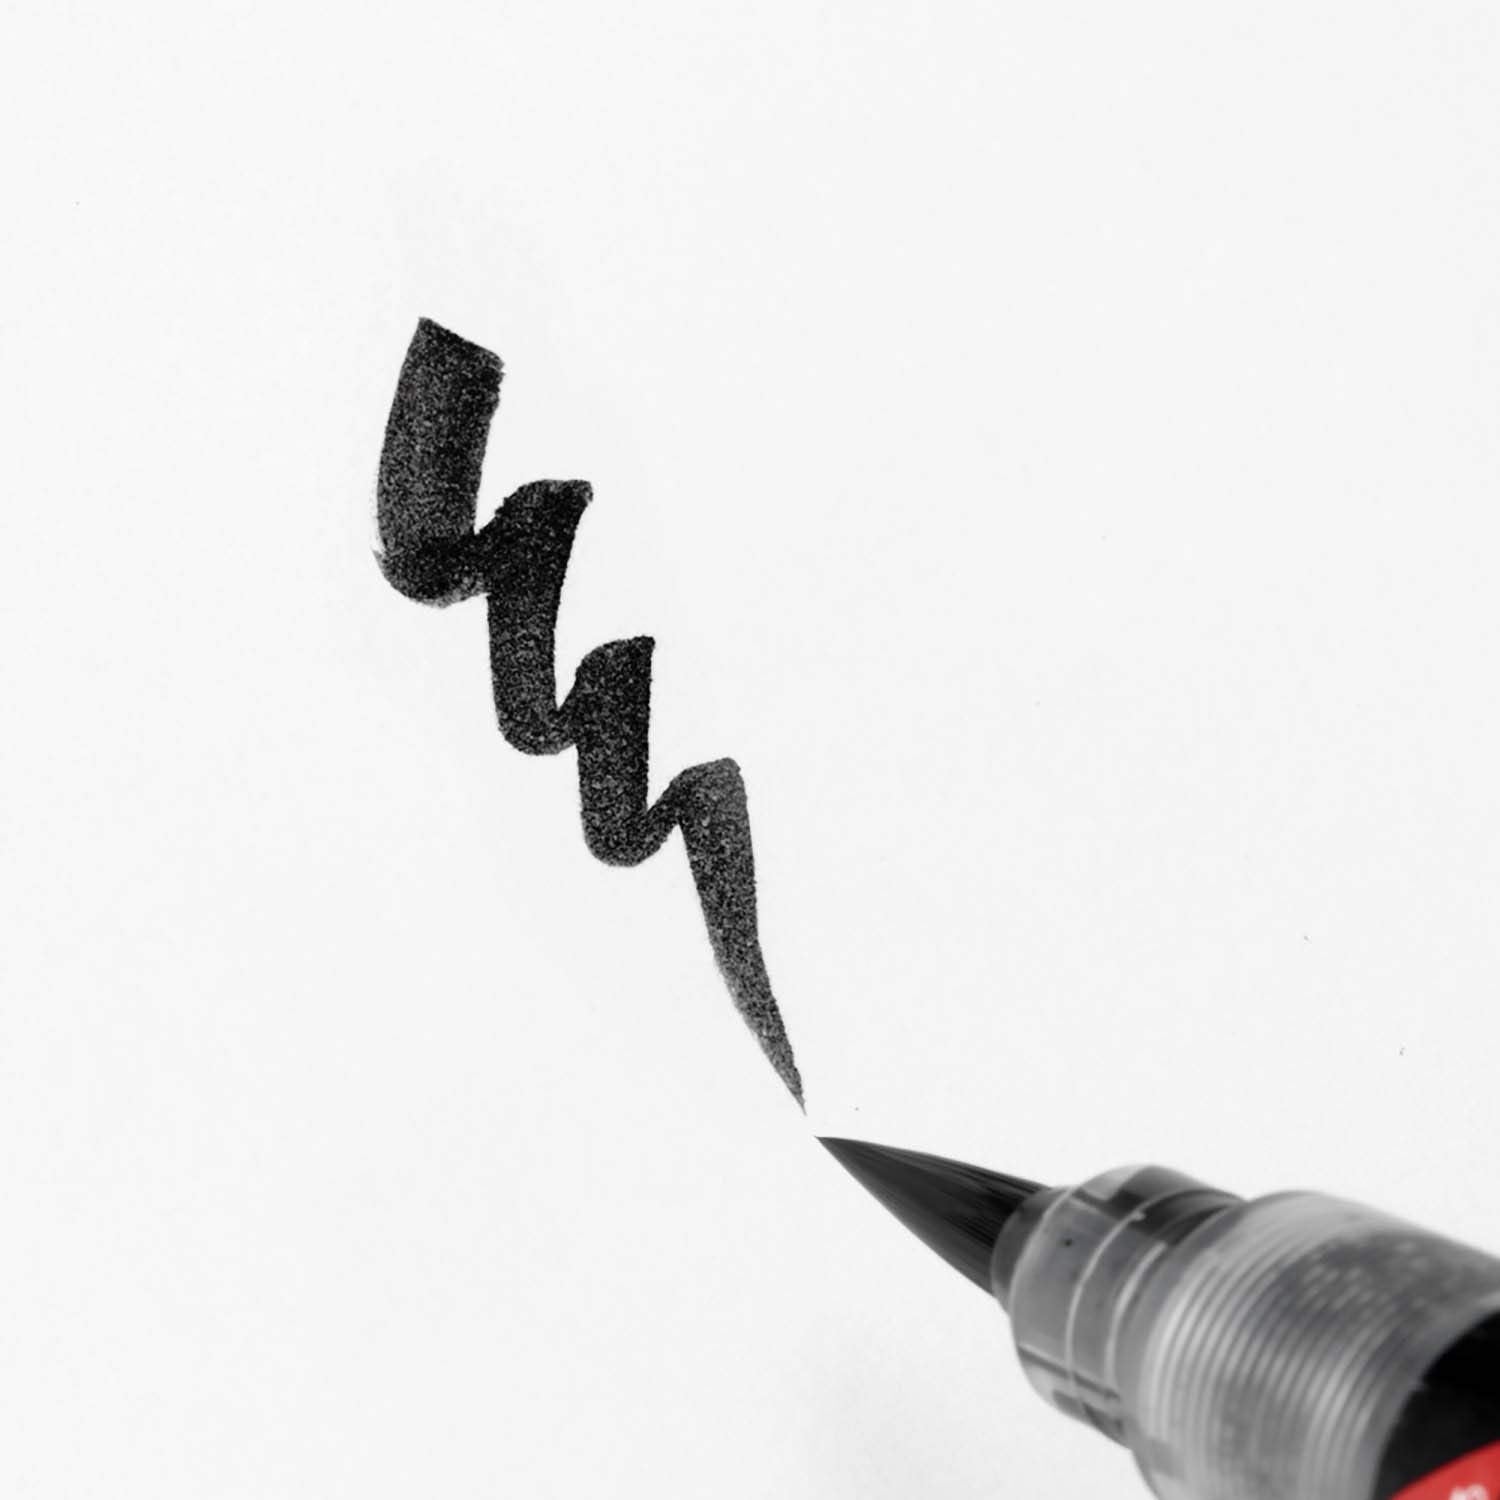 Pentel Fude Pigment Ink Brush Pen - Black Ink - Medium Tip -  - Brush Pens - Bunbougu